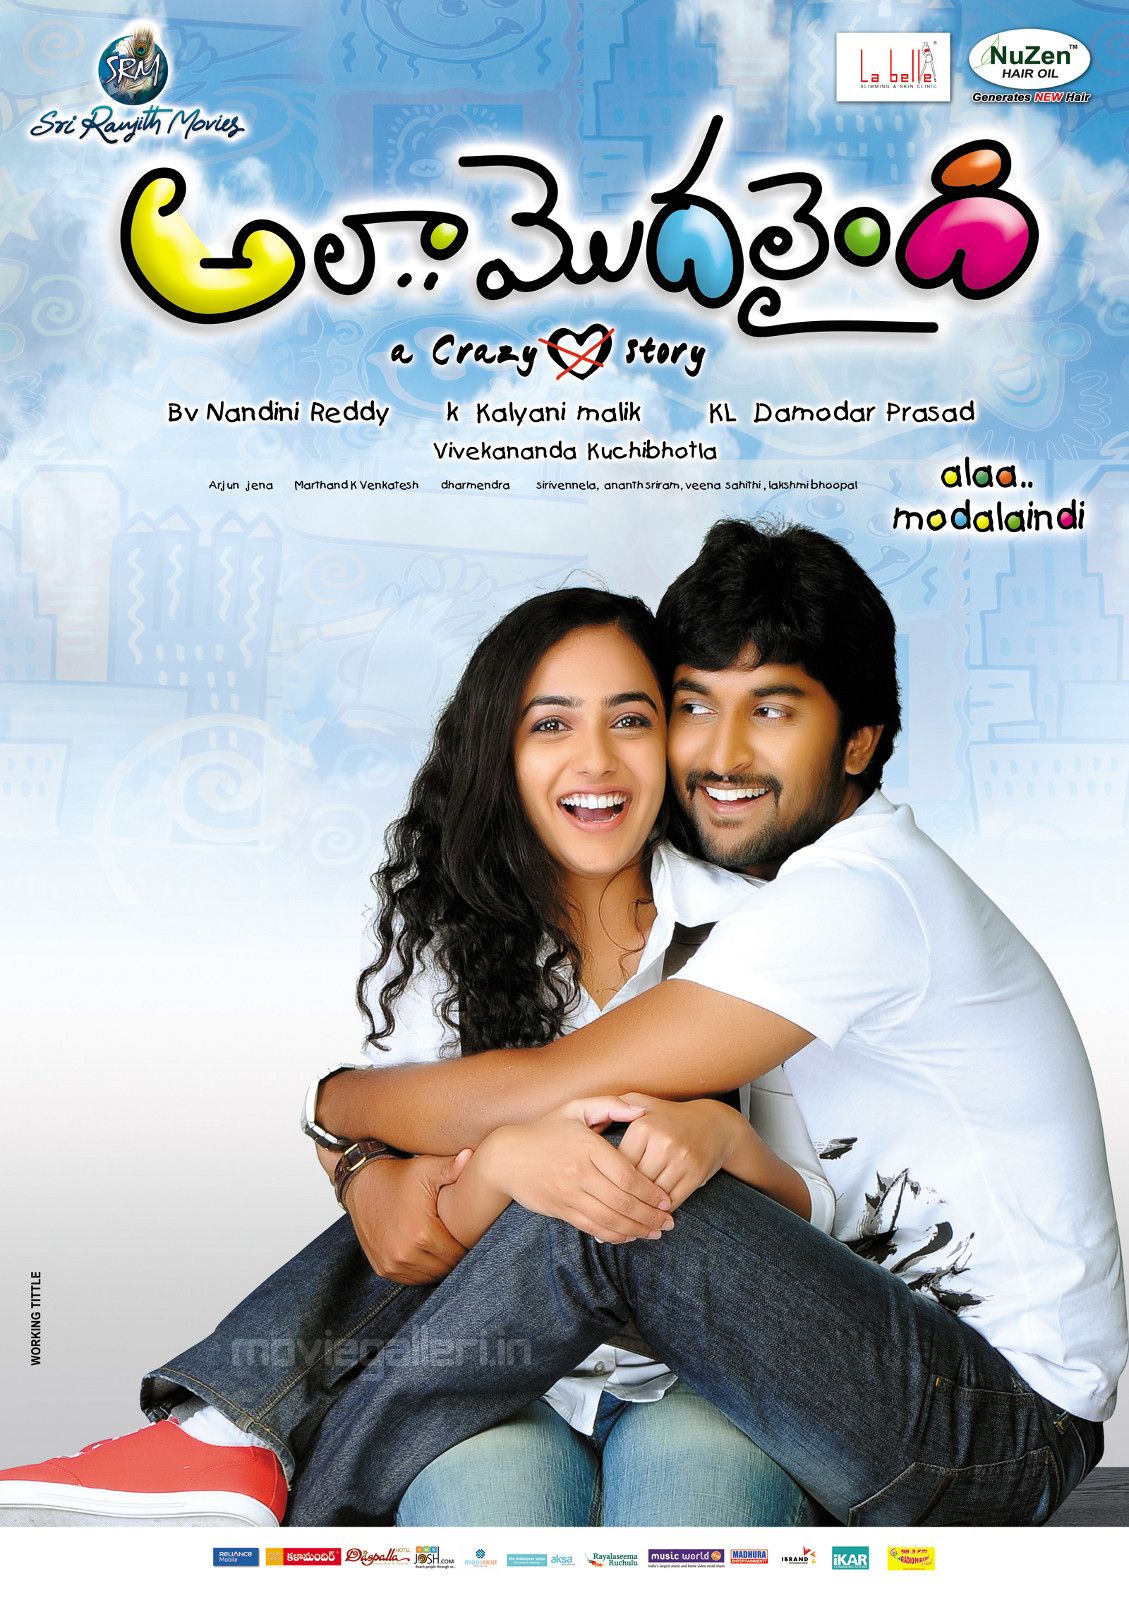 Ala Modalaindi Wallpaper, Ala Modalaindi Telugu Movie Wallpaper. New Movie Posters